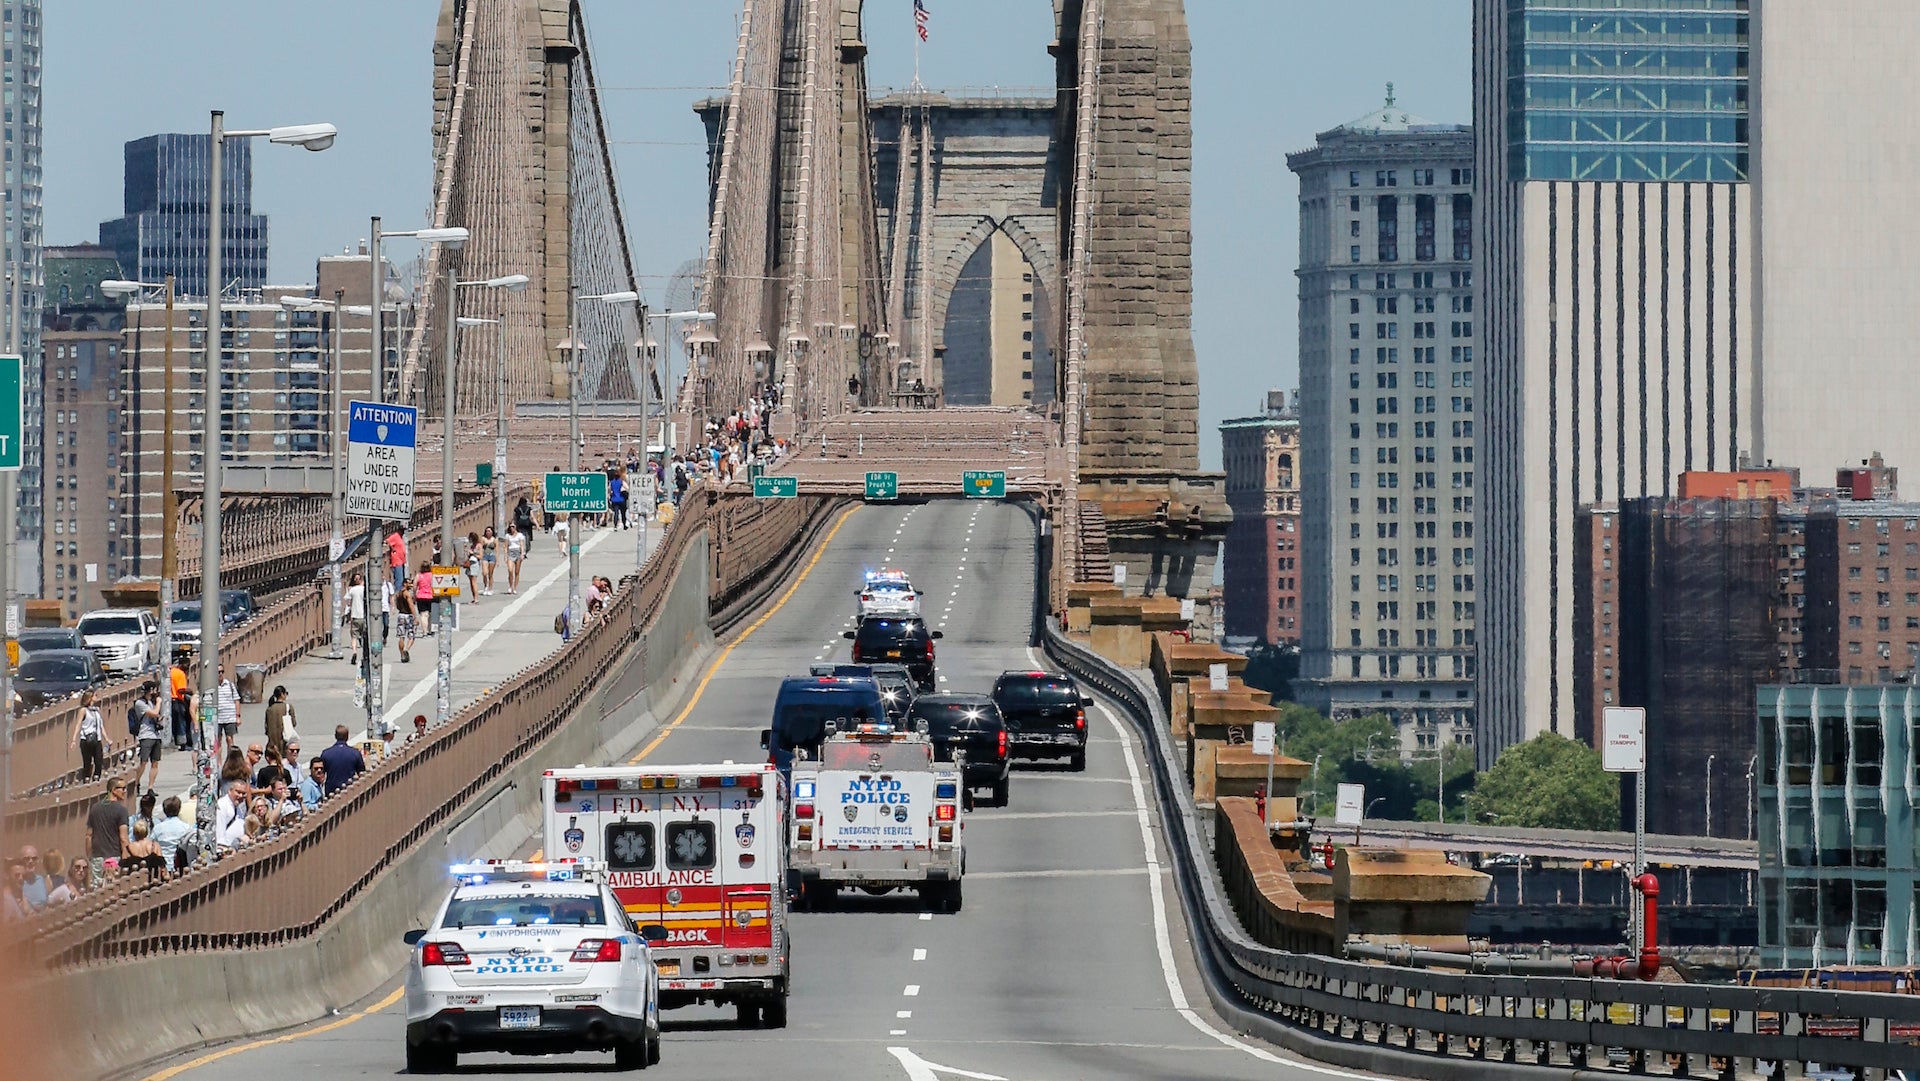 Feds Scramble to Transport ‘El Chapo’ Guzman to NYC Trial, Could Close Brooklyn Bridge